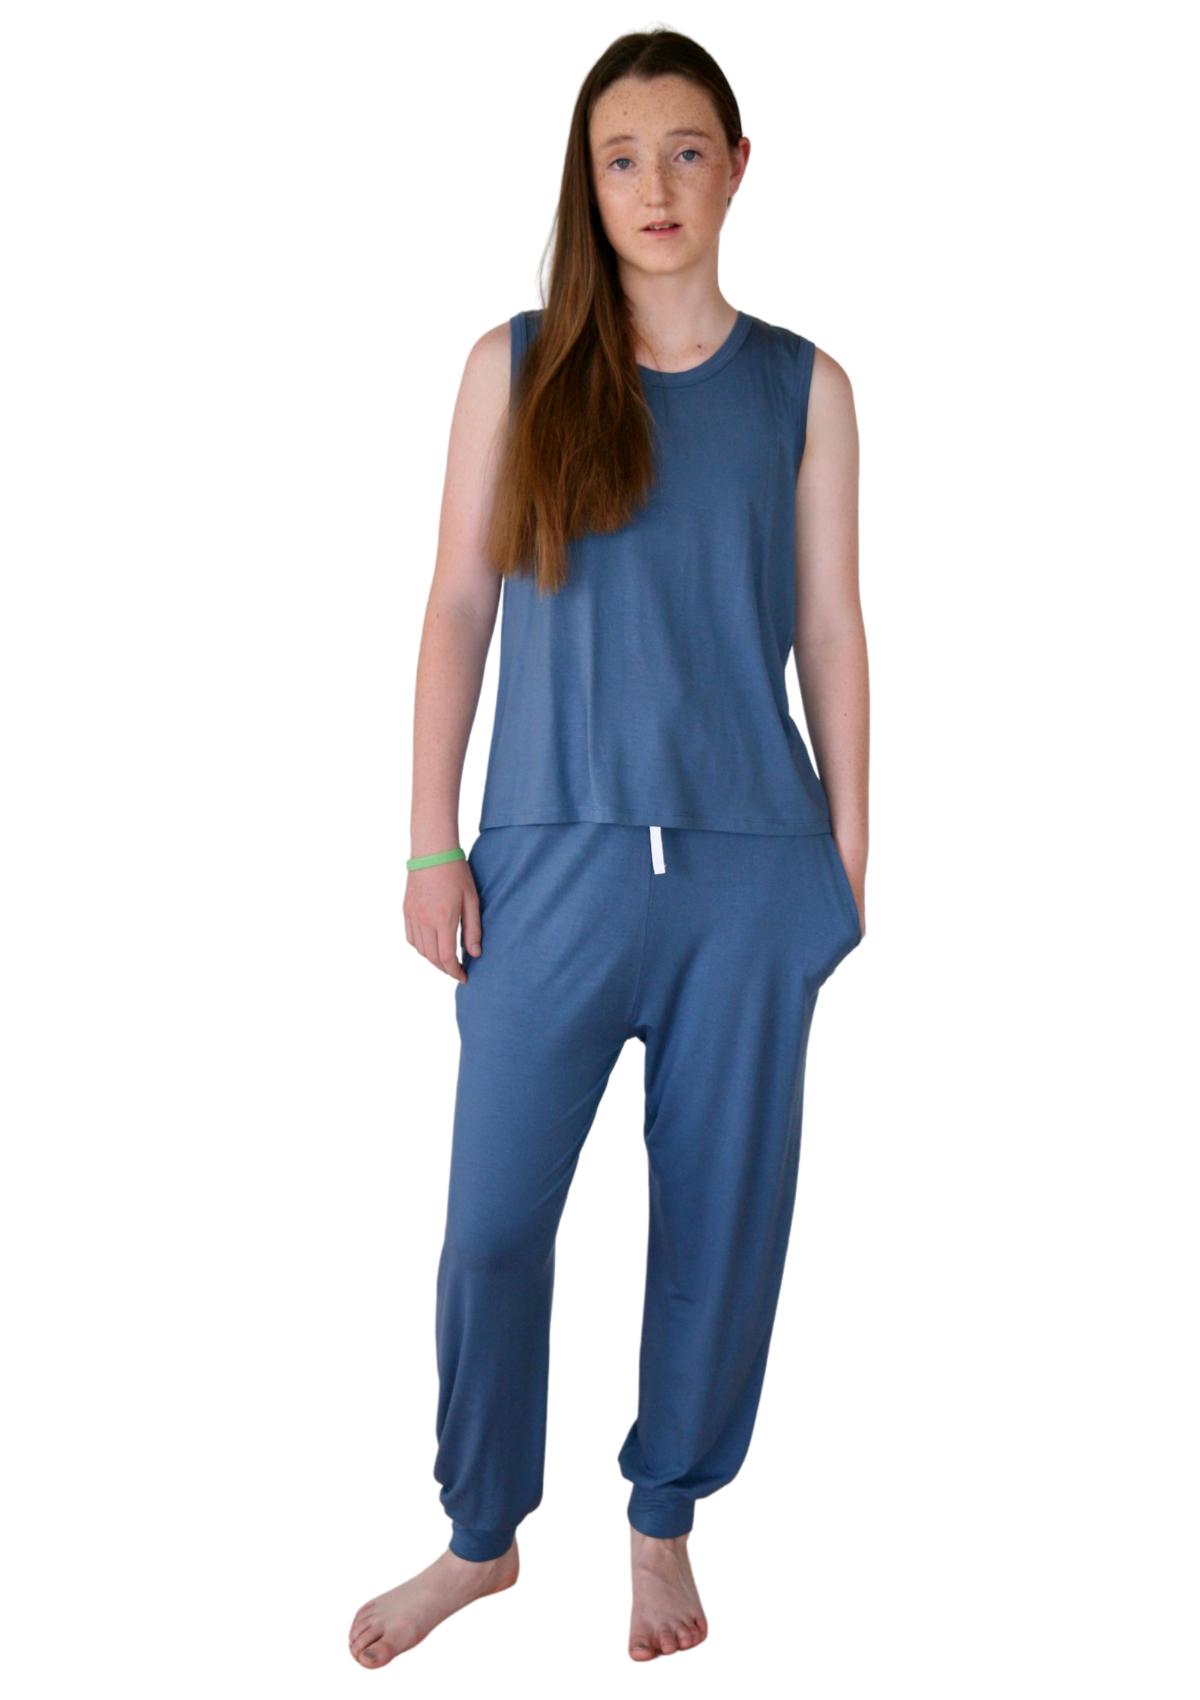 blue teen girls pyjamas set long pants and singlet by Love Haidee Australia front Ella